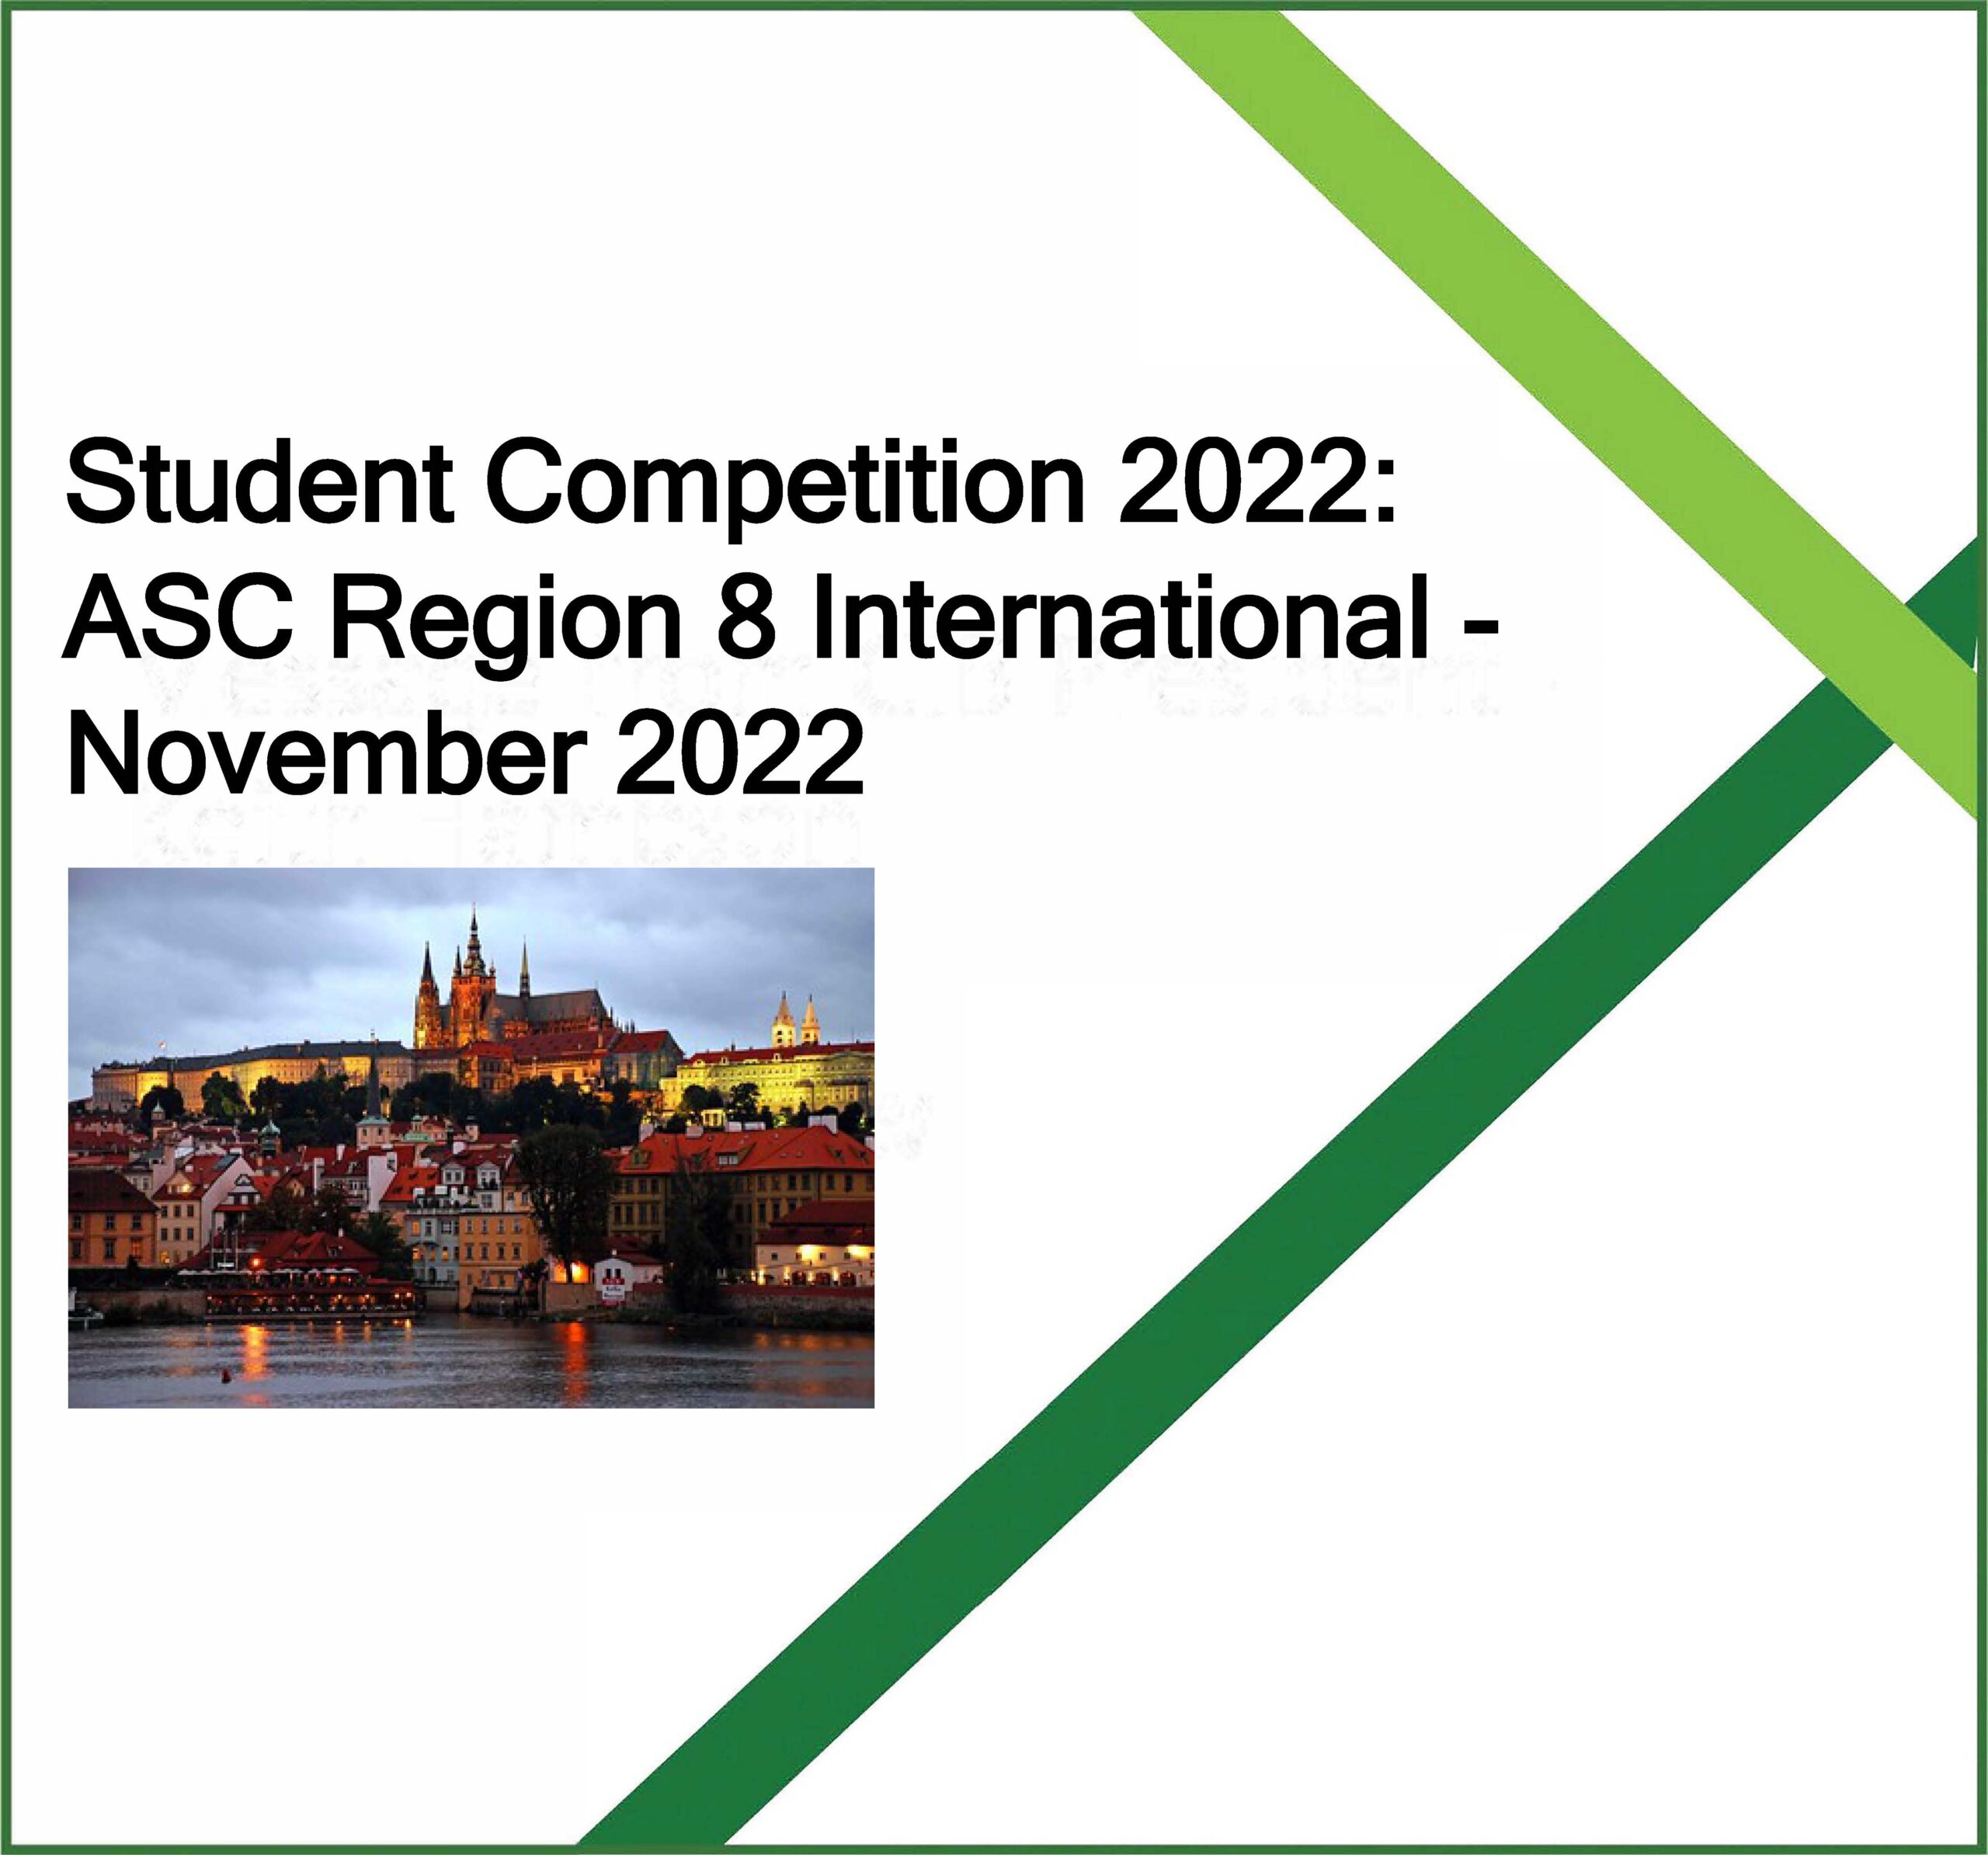 Student Competition 2022 ASC Region 8 International November 2022 CIB